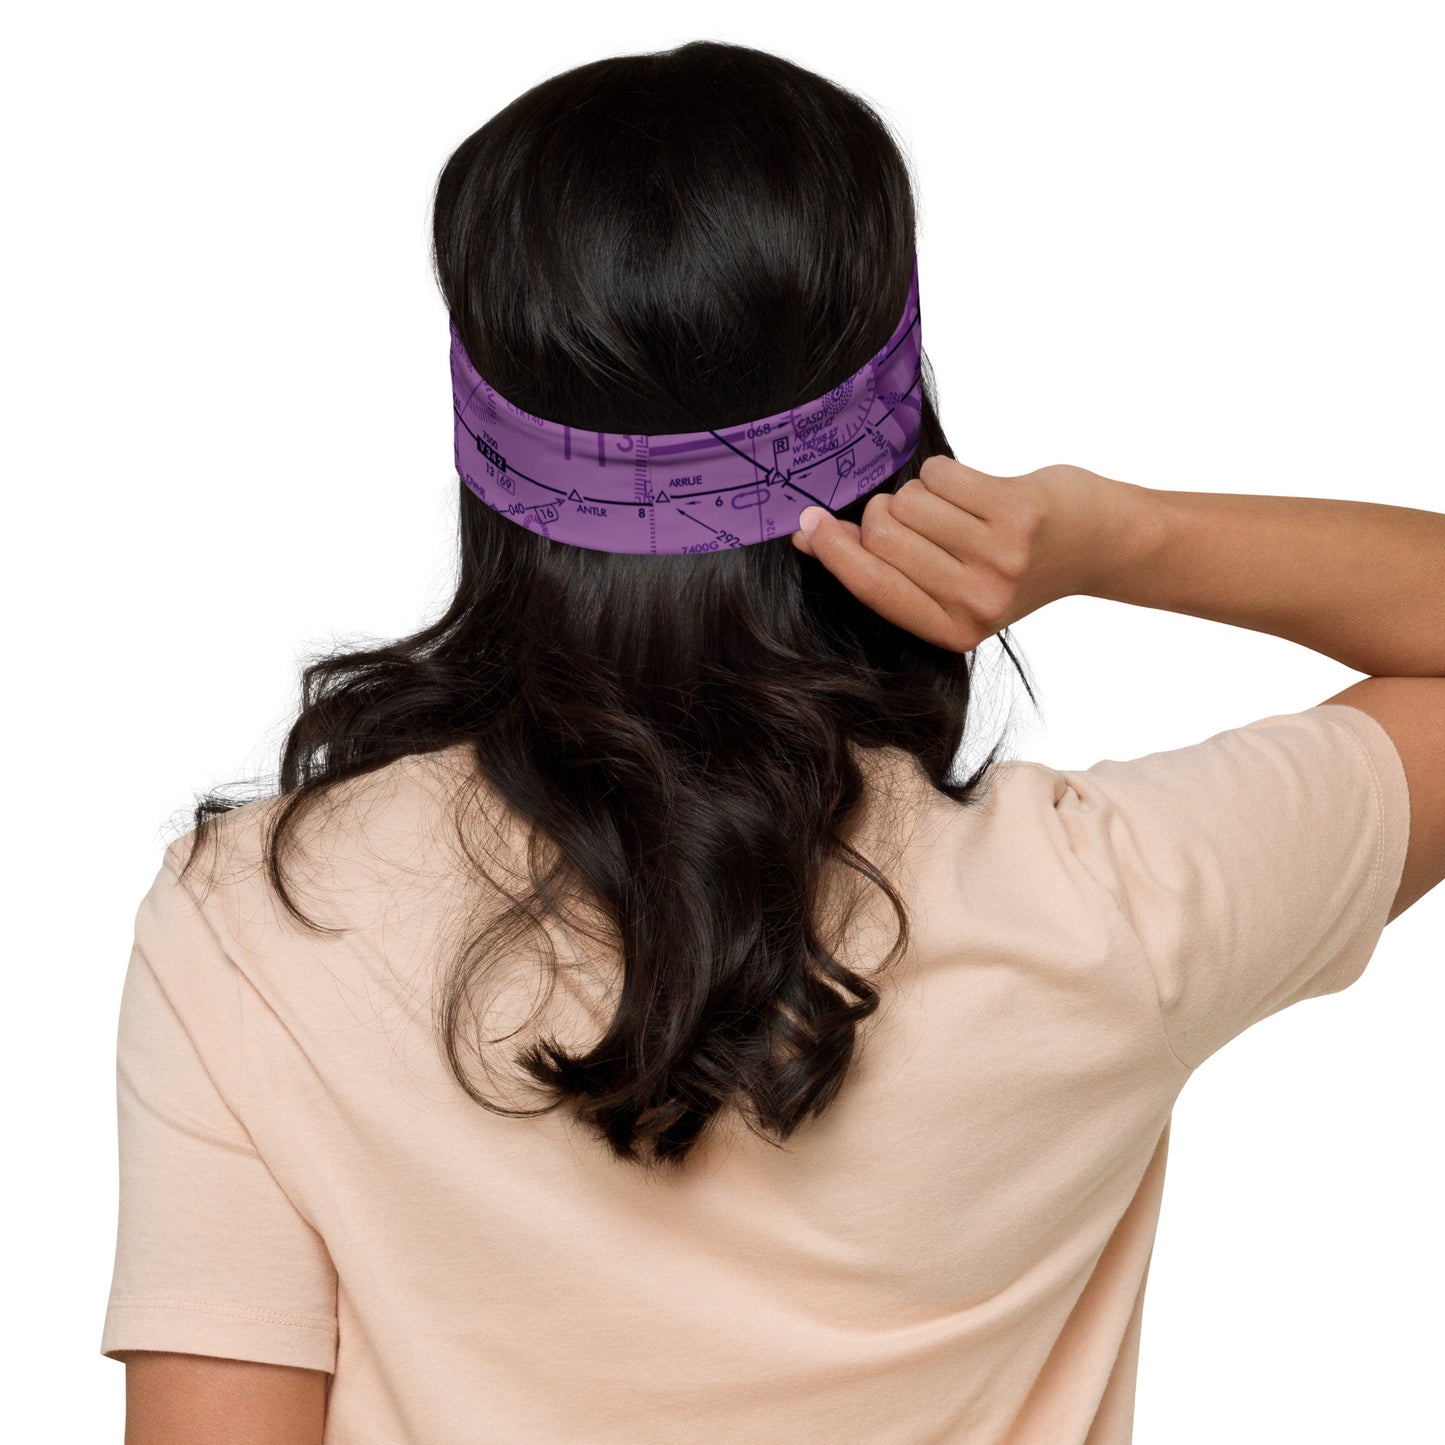 Enroute Low Altitude Chart headband (purple)